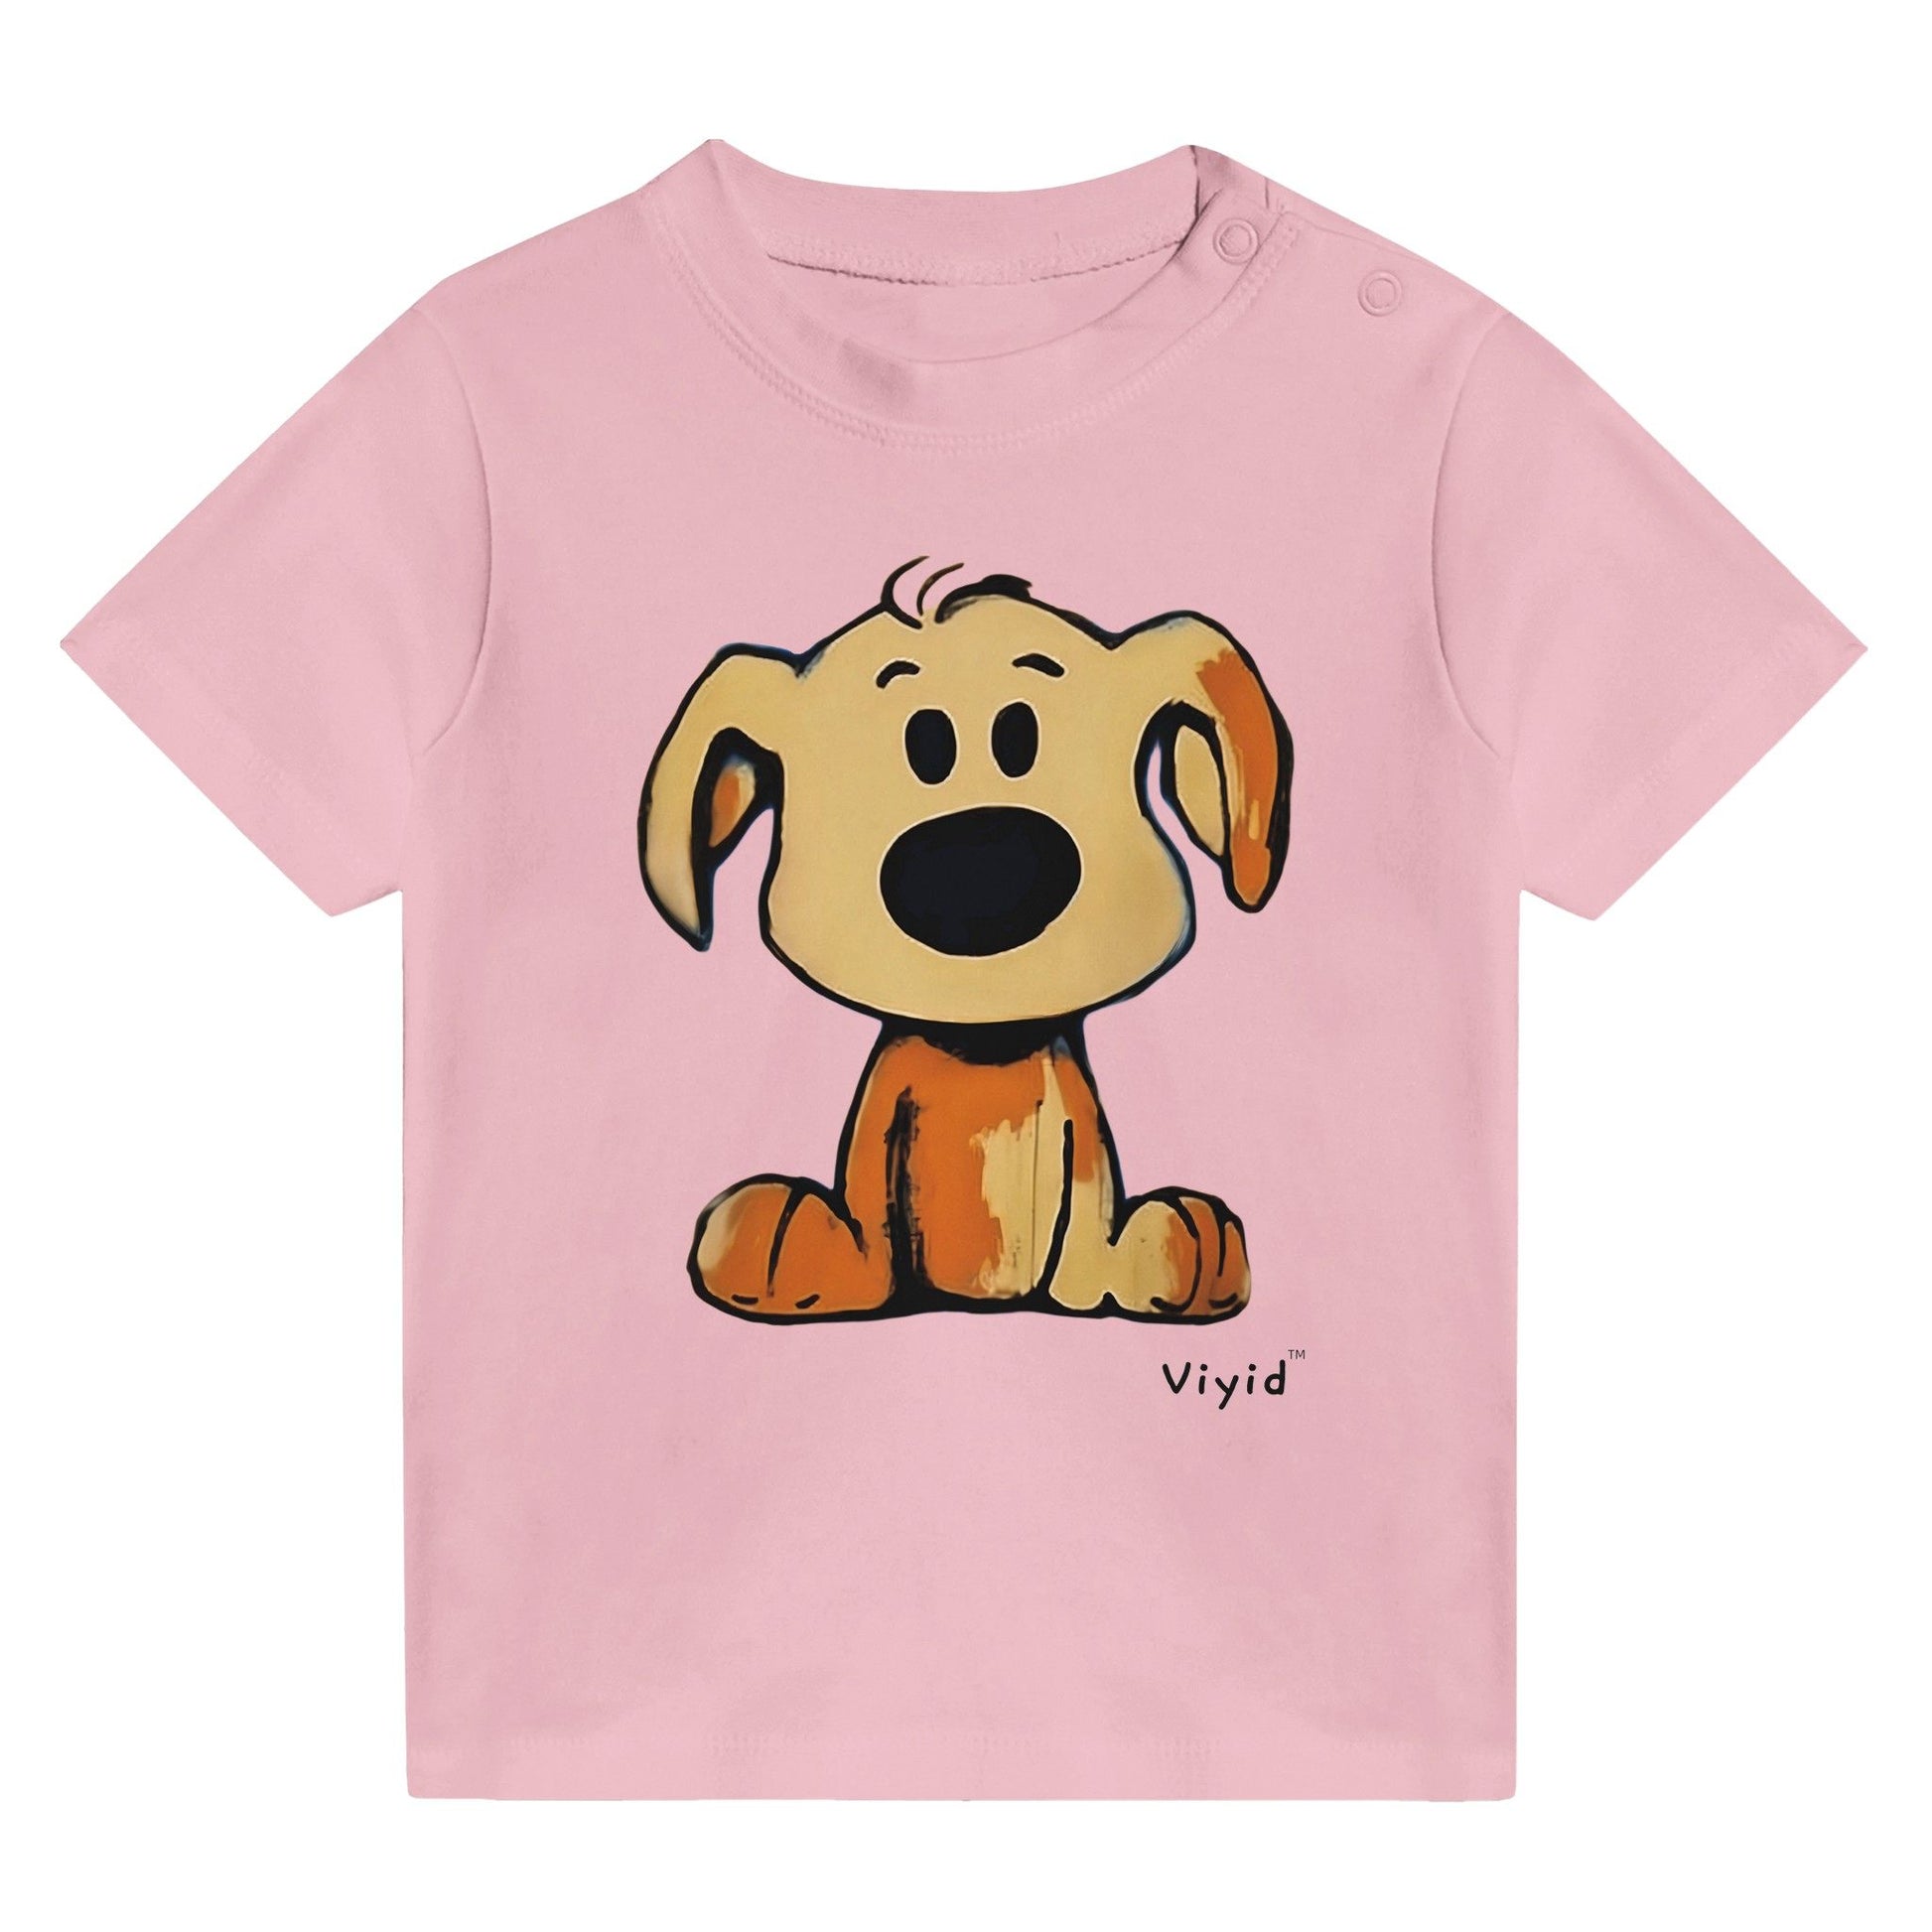 beagle cartoon dog baby t-shirt pink